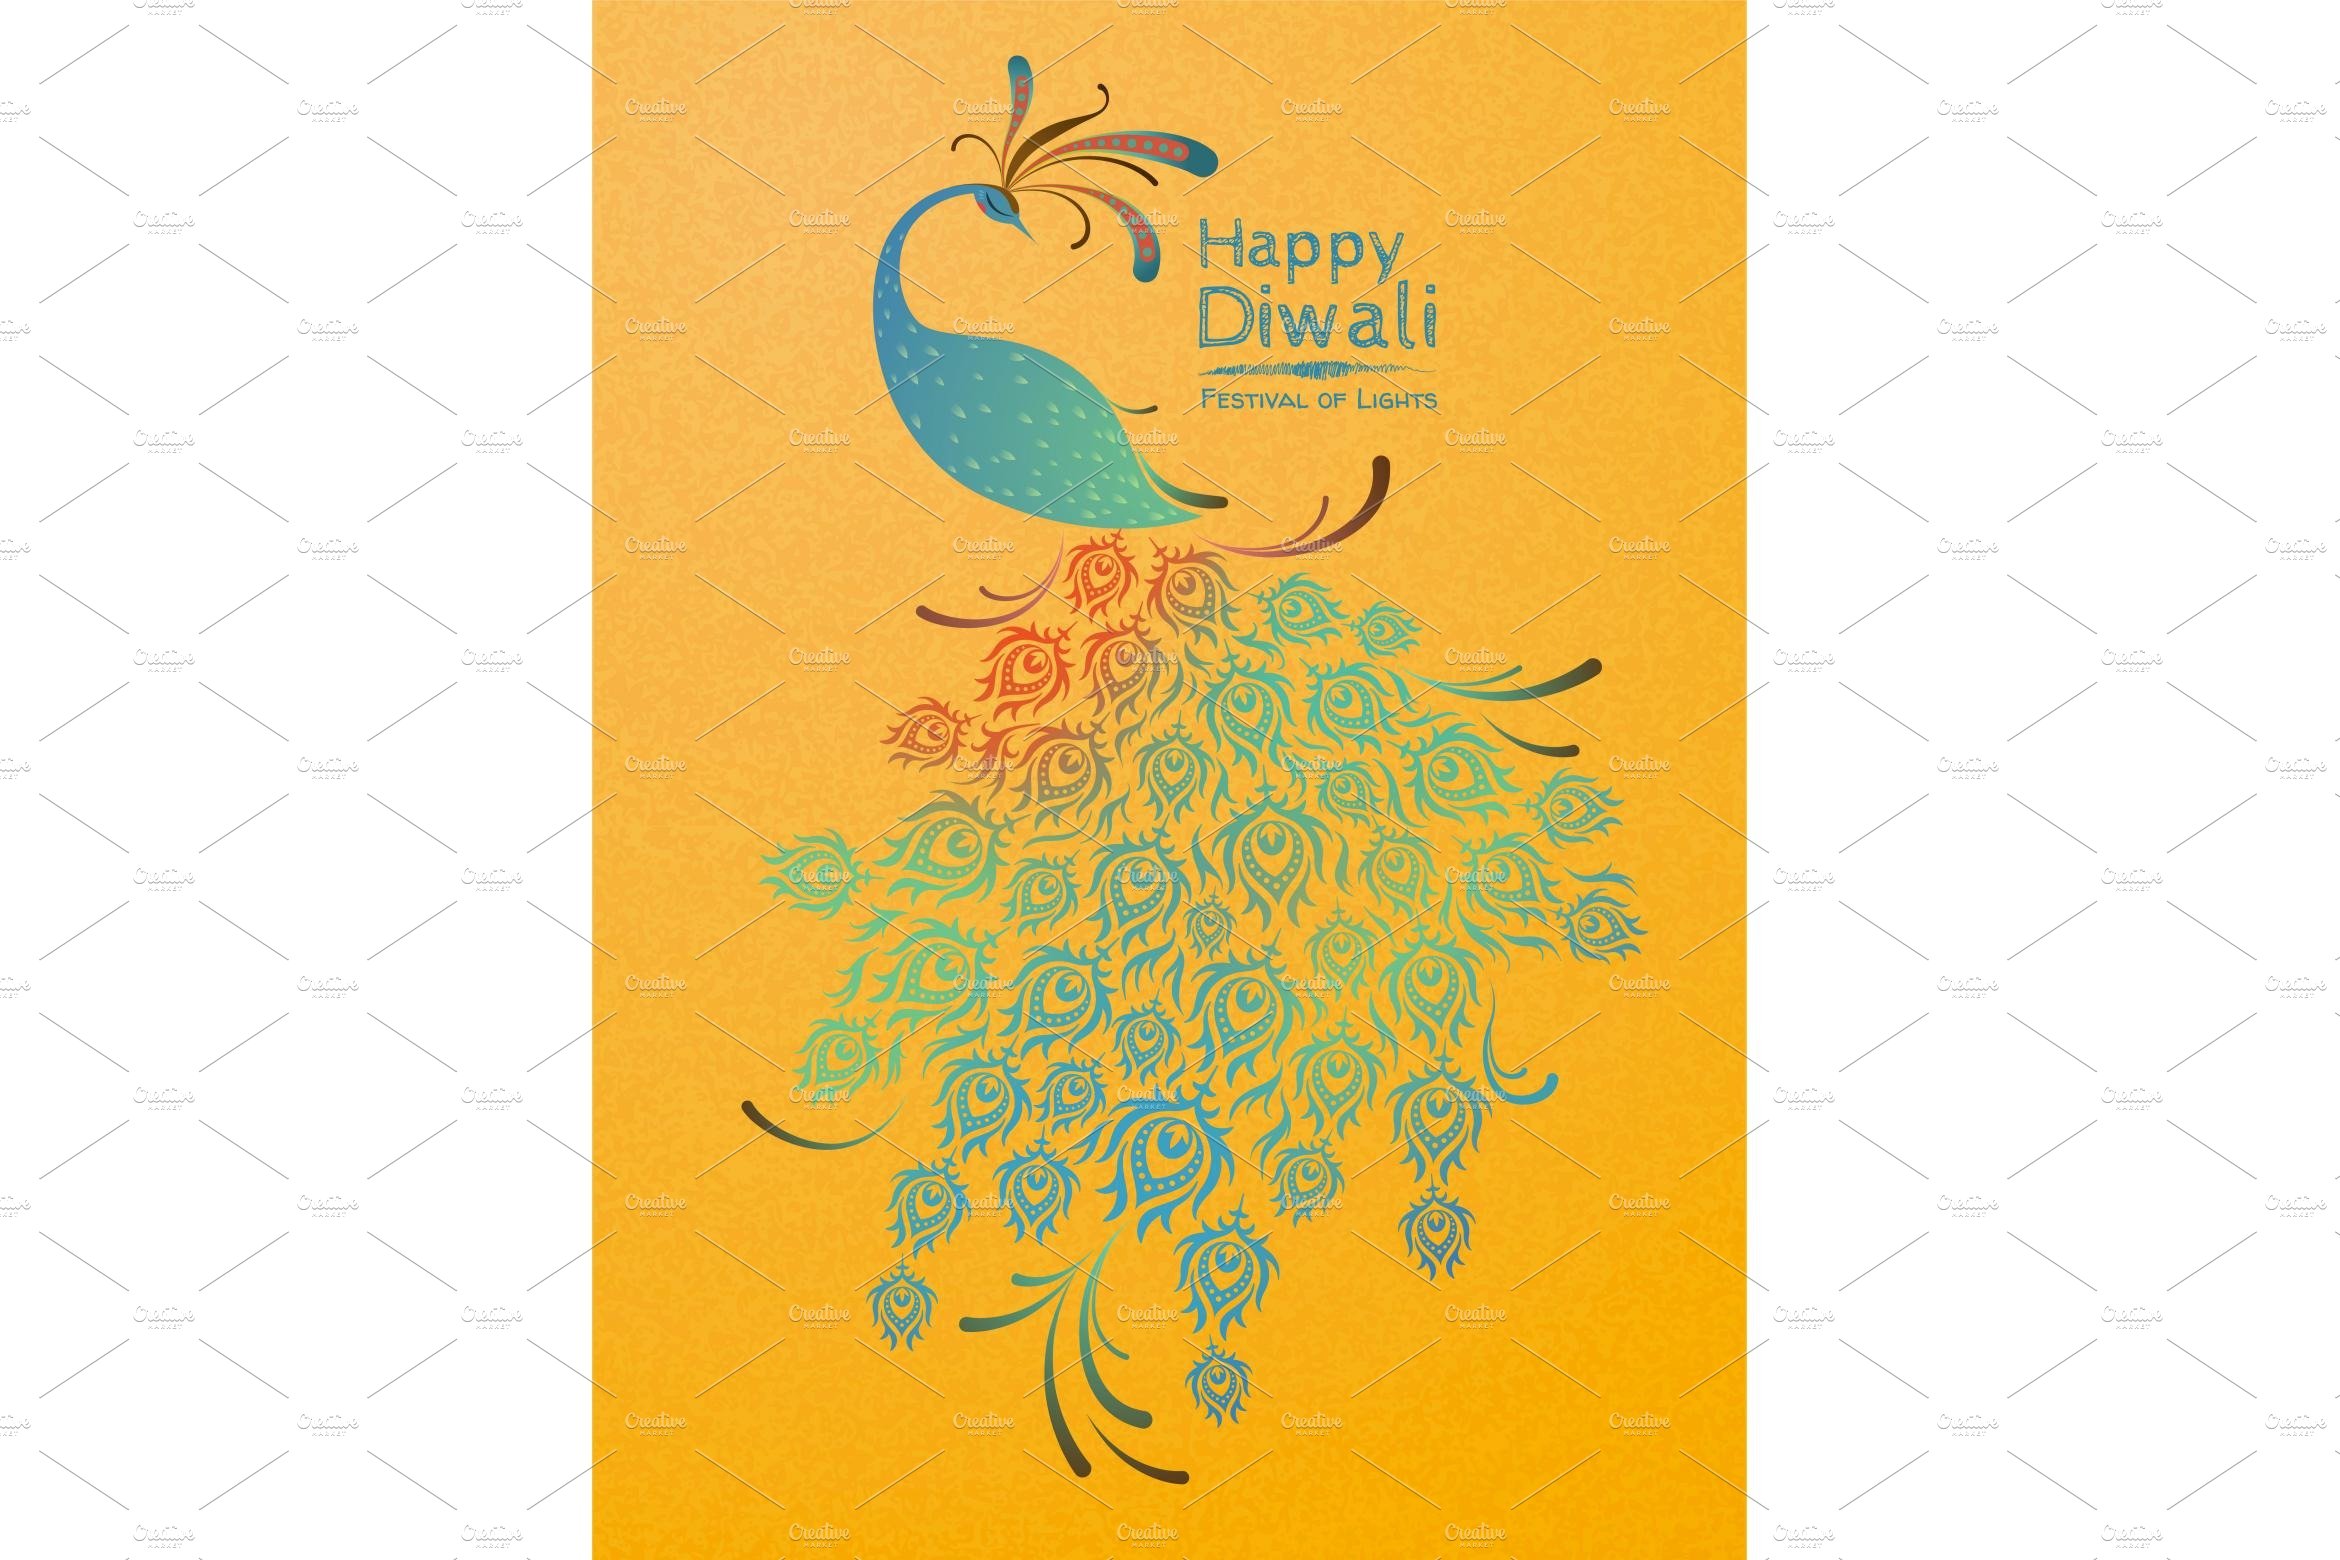 diwali peacock illustration cover image.